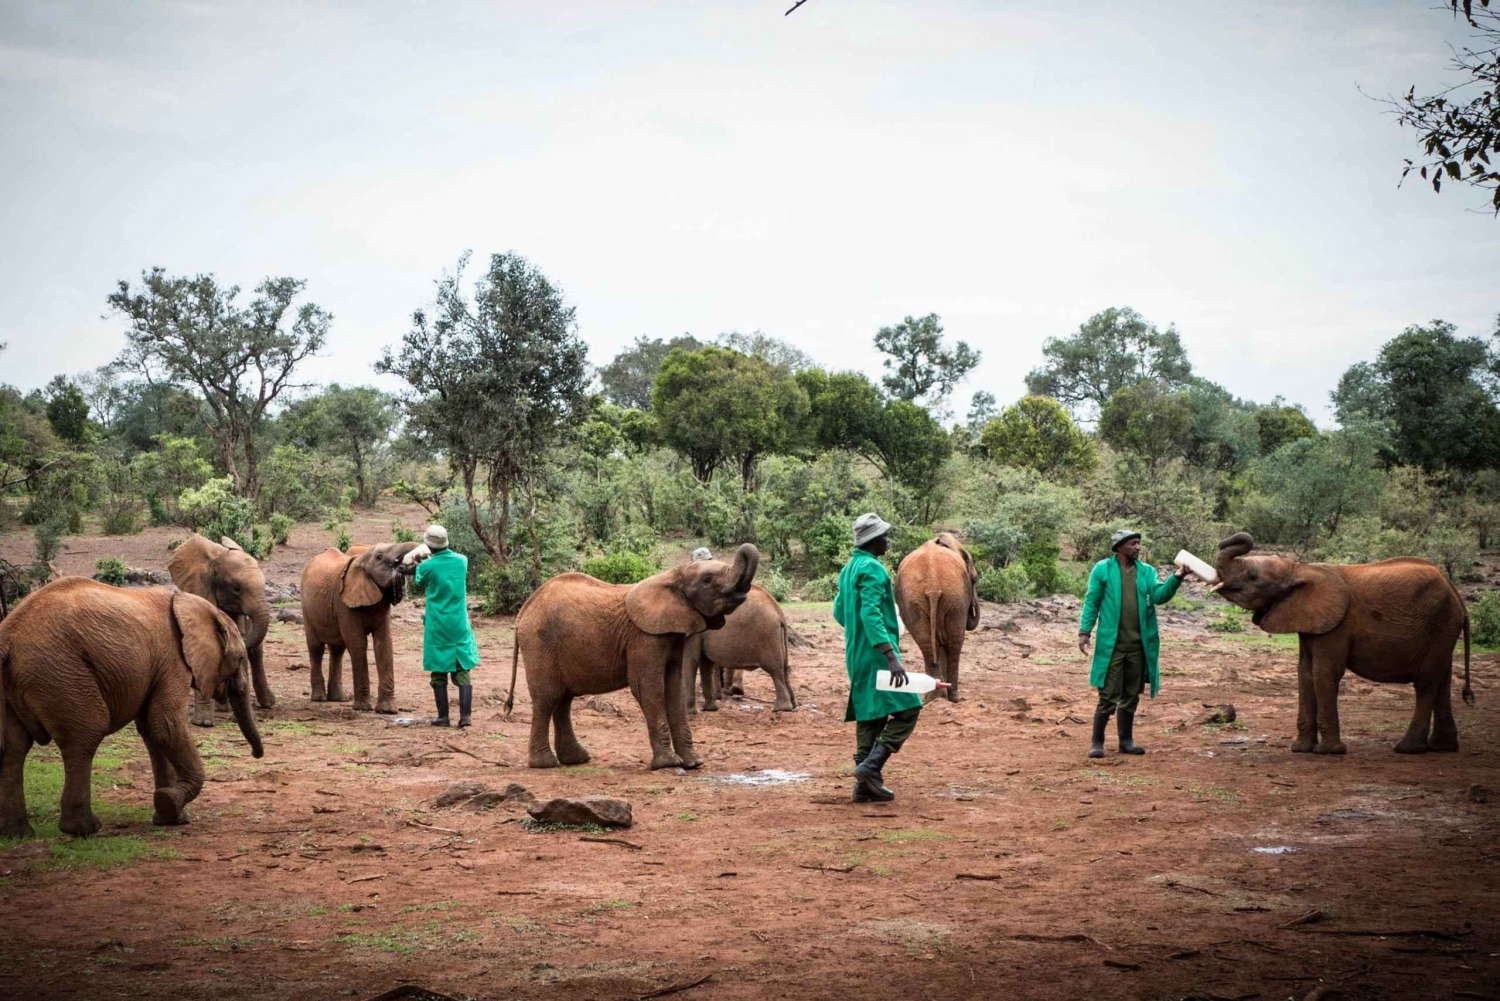 Nairobi; David Sheldrick Elephant Trust Halfdaagse tour